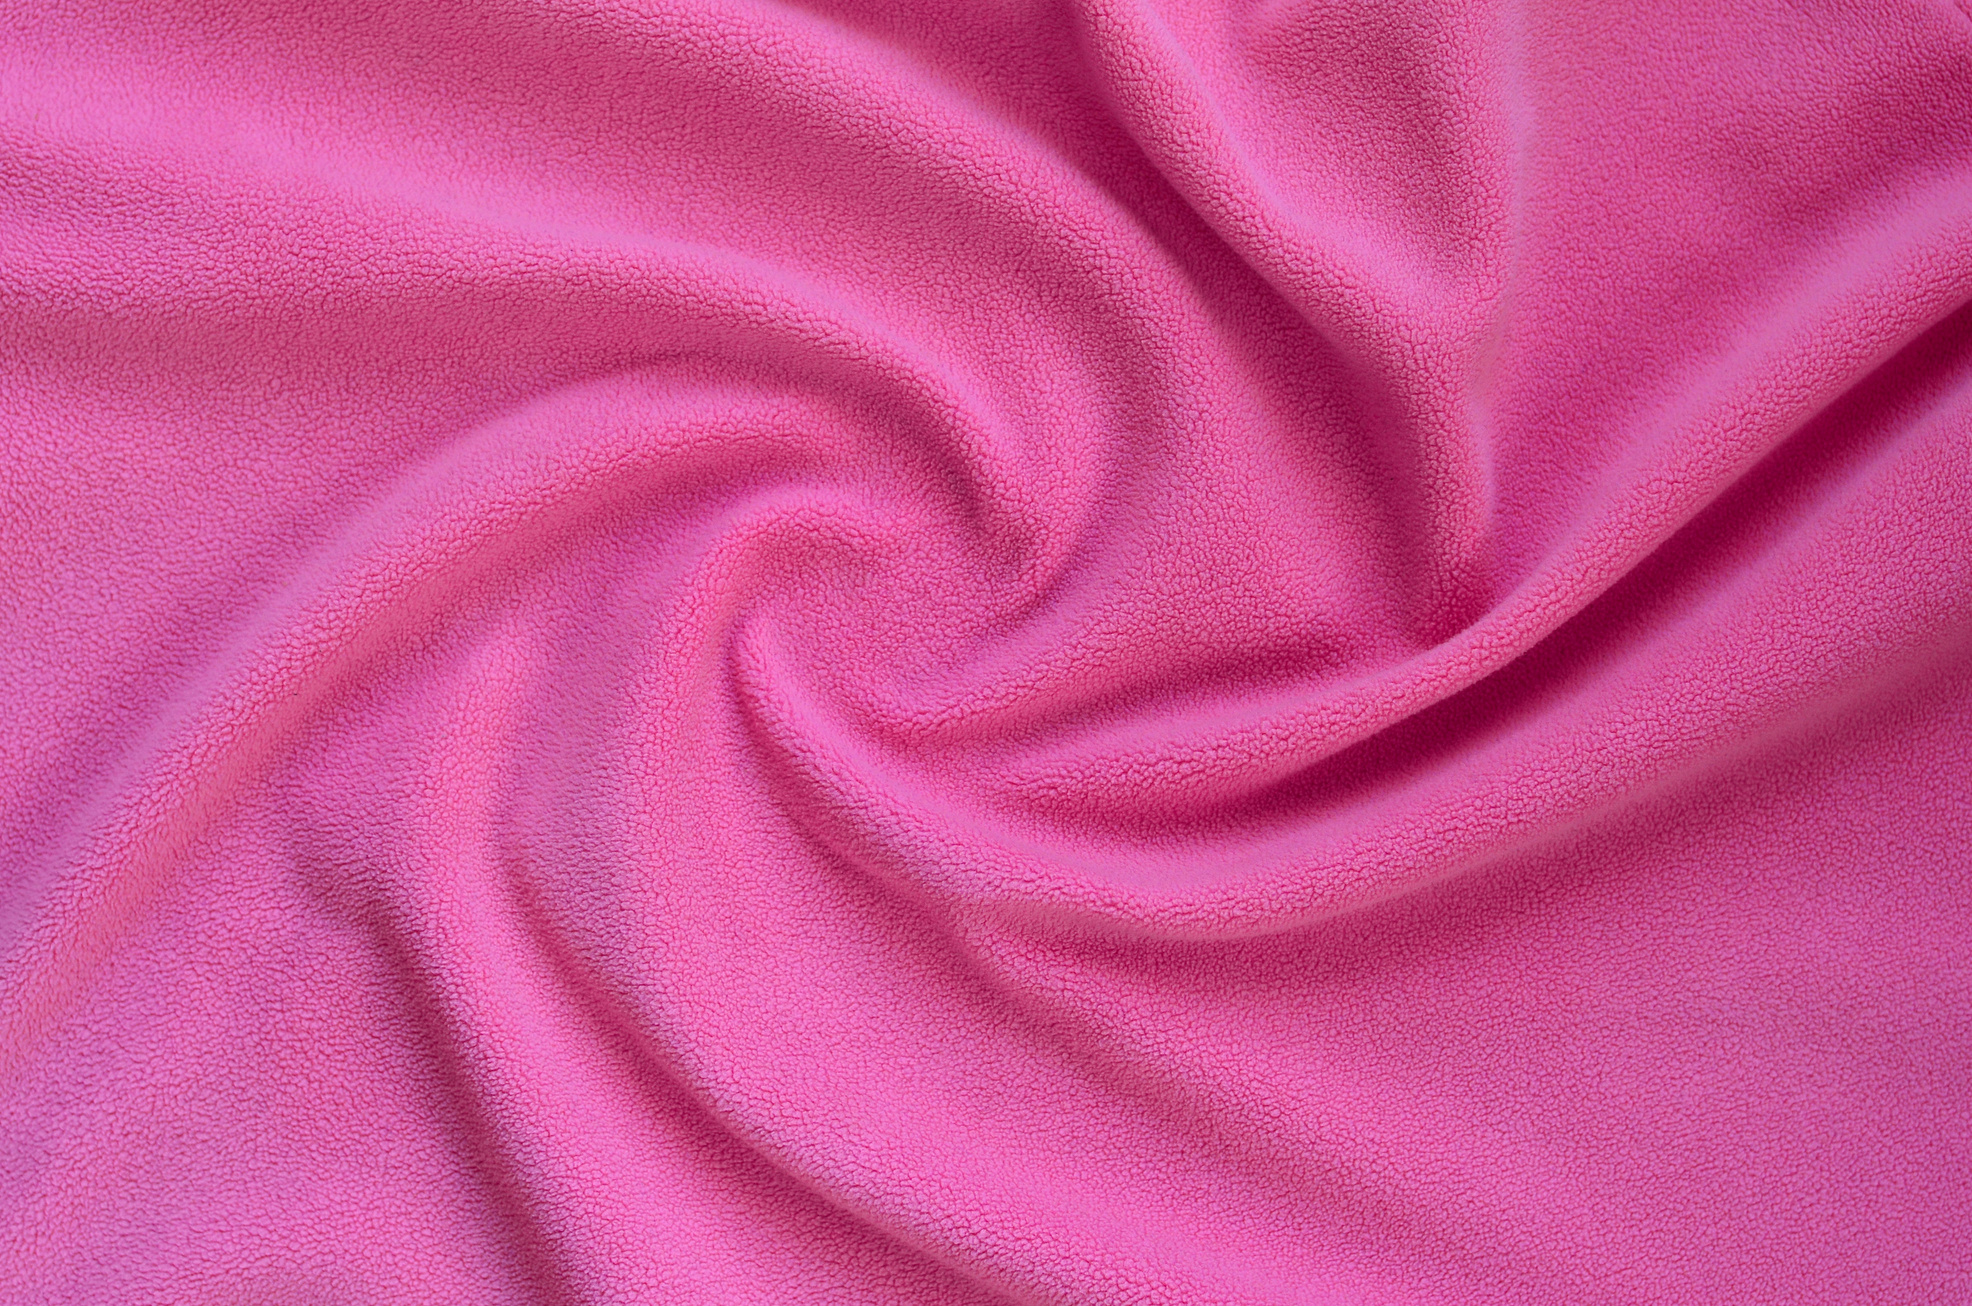 Blanket of Furry Pink Fleece Fabric